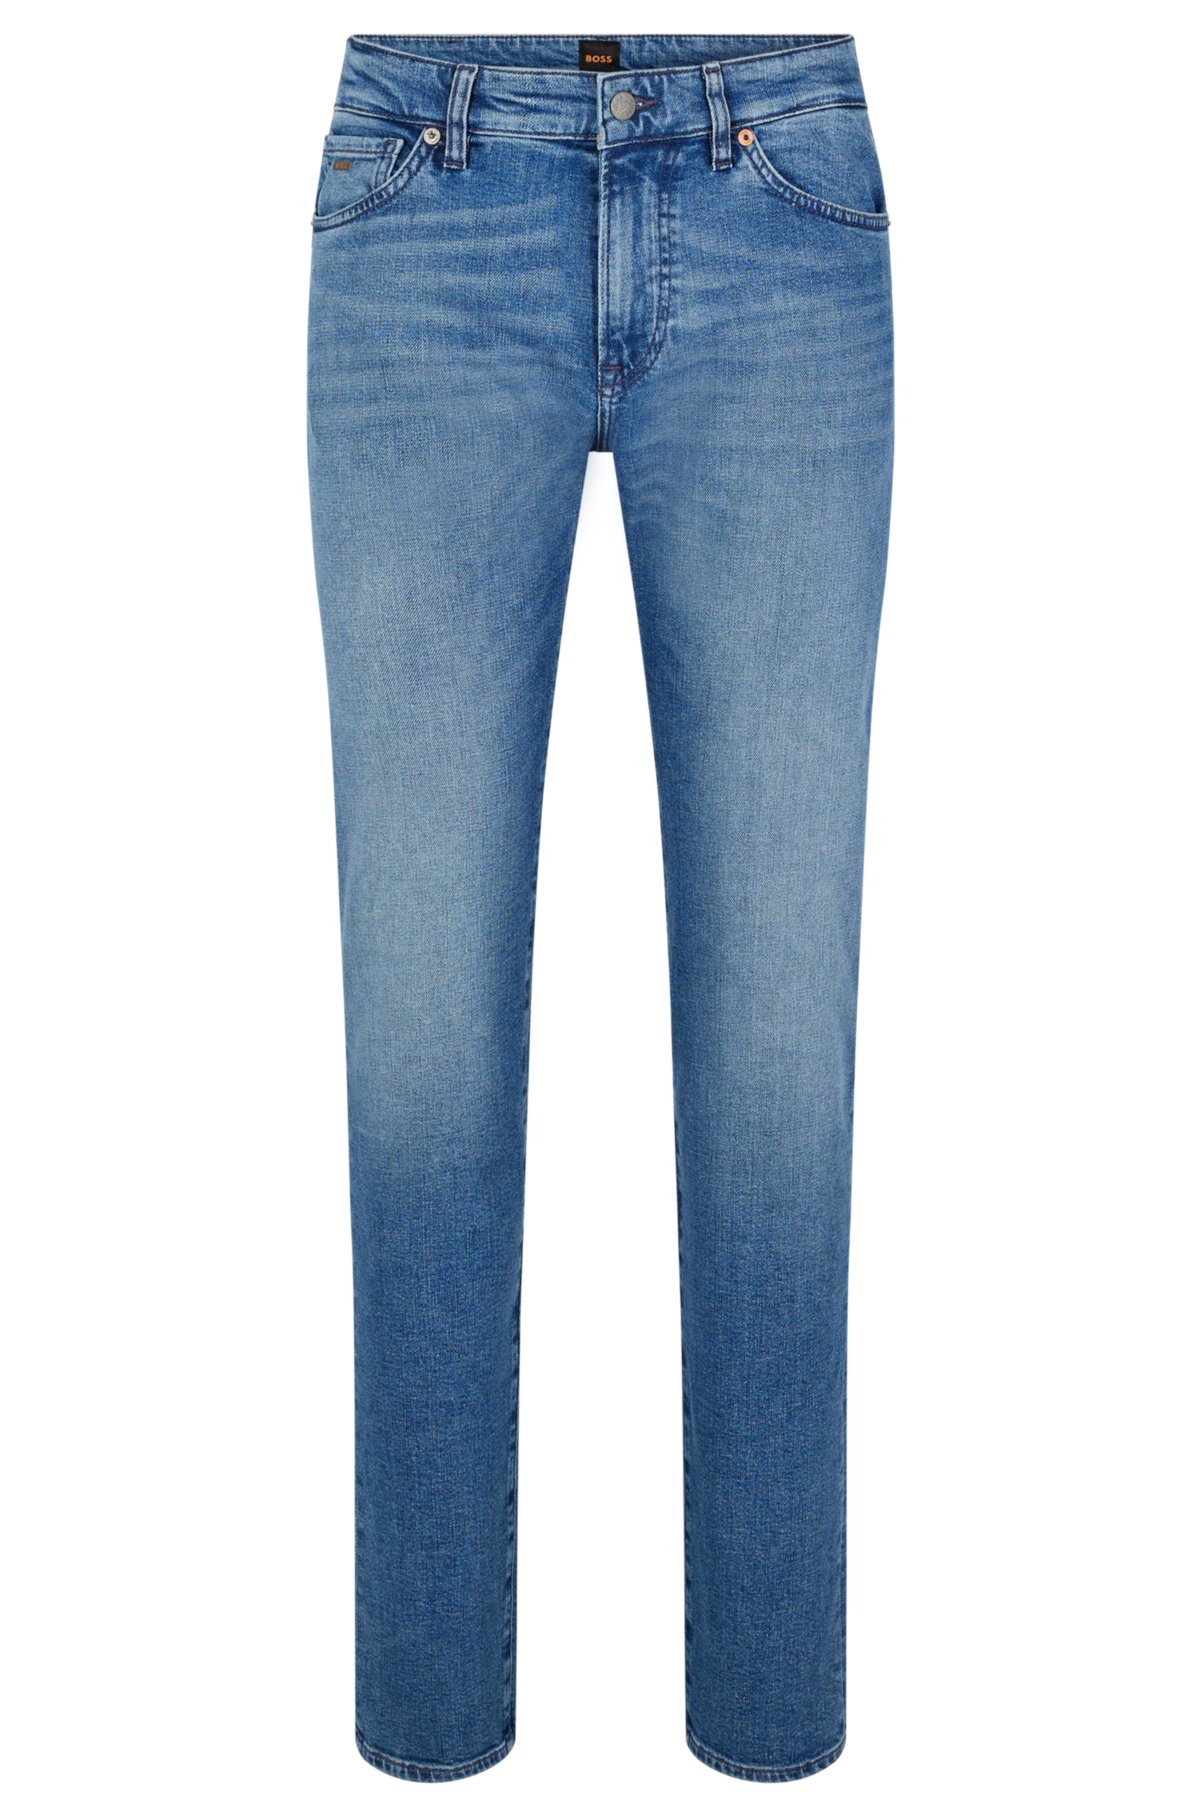 BOSS - Blaue Jeans aus bequemem Stretch-Denim Regular-Fit